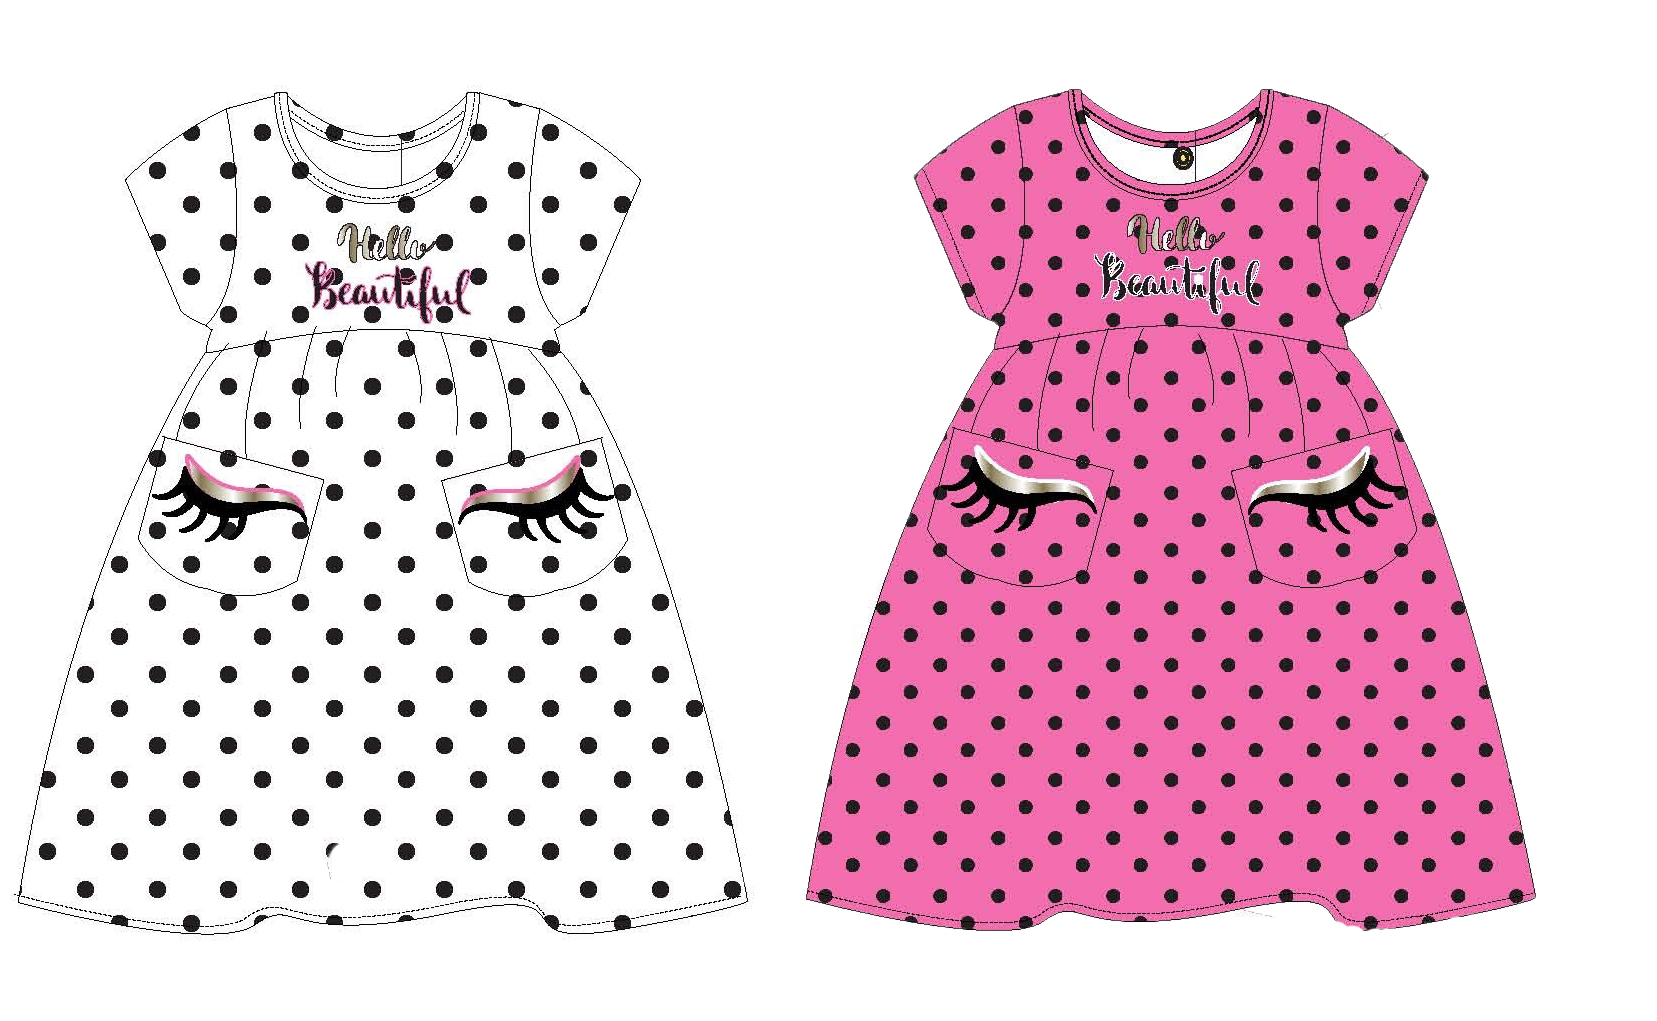 Toddler Girl's Knit Hello Beautiful Dresses w/ Polka Dots & Blush Eye-Lash Print - Sizes 2T-4T